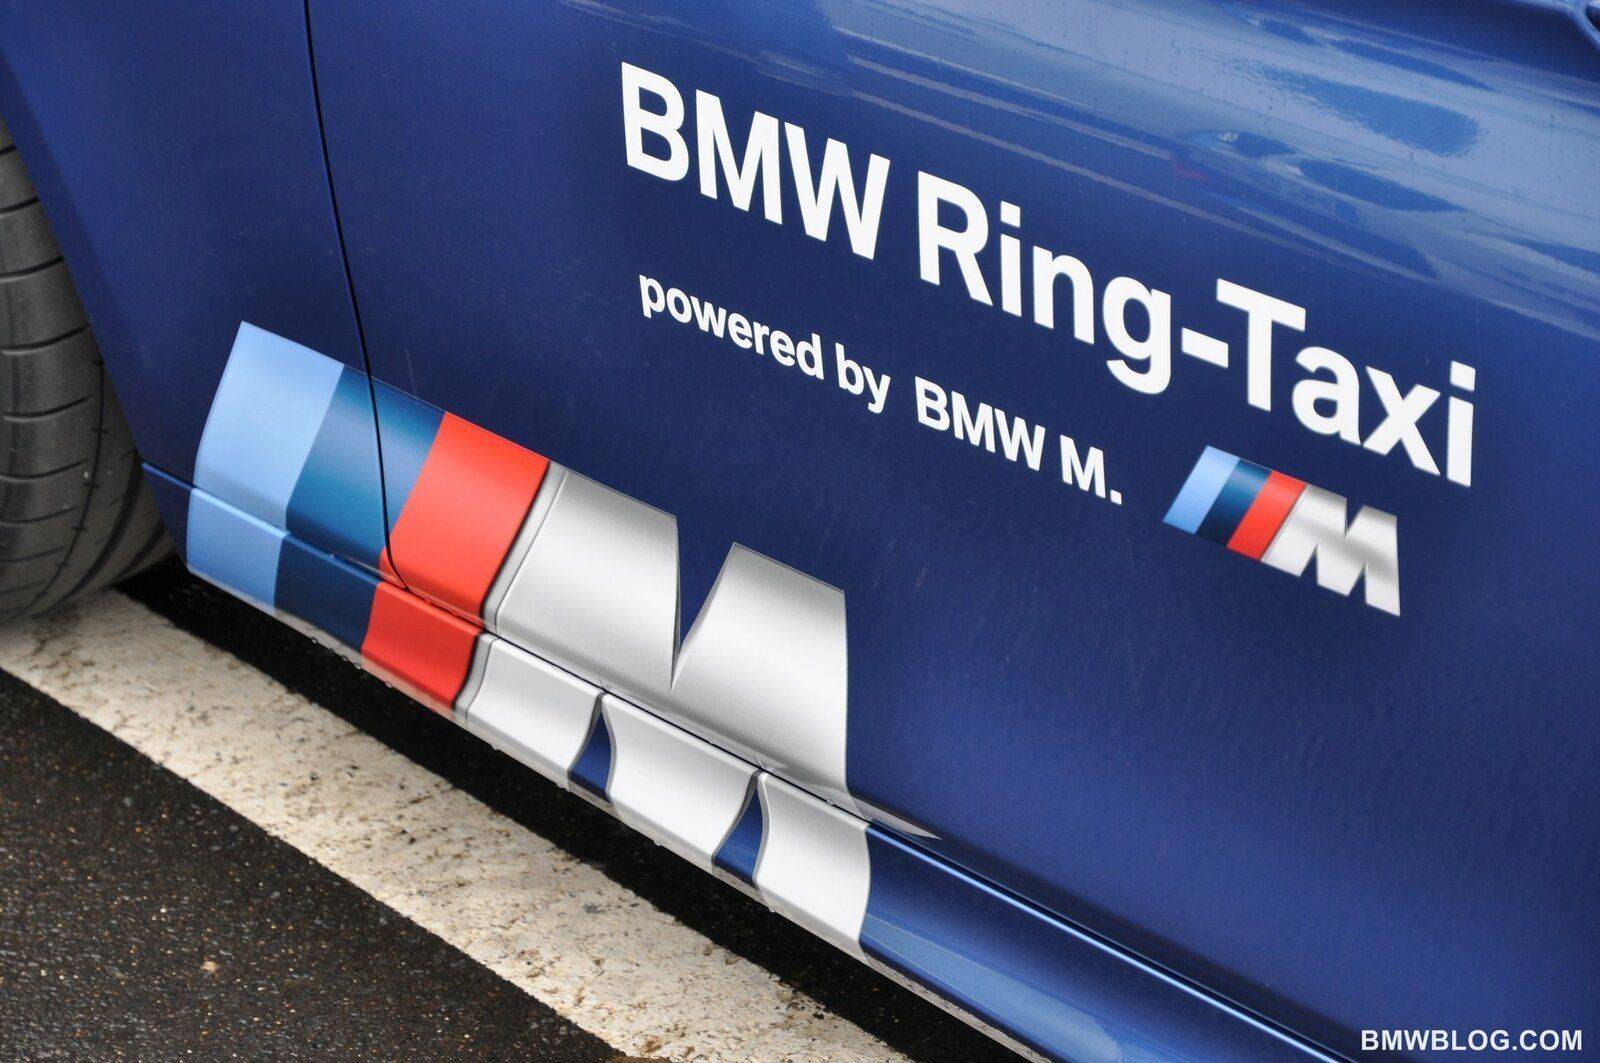 BMW-M5-F10-Ring-Taxi-14.jpg